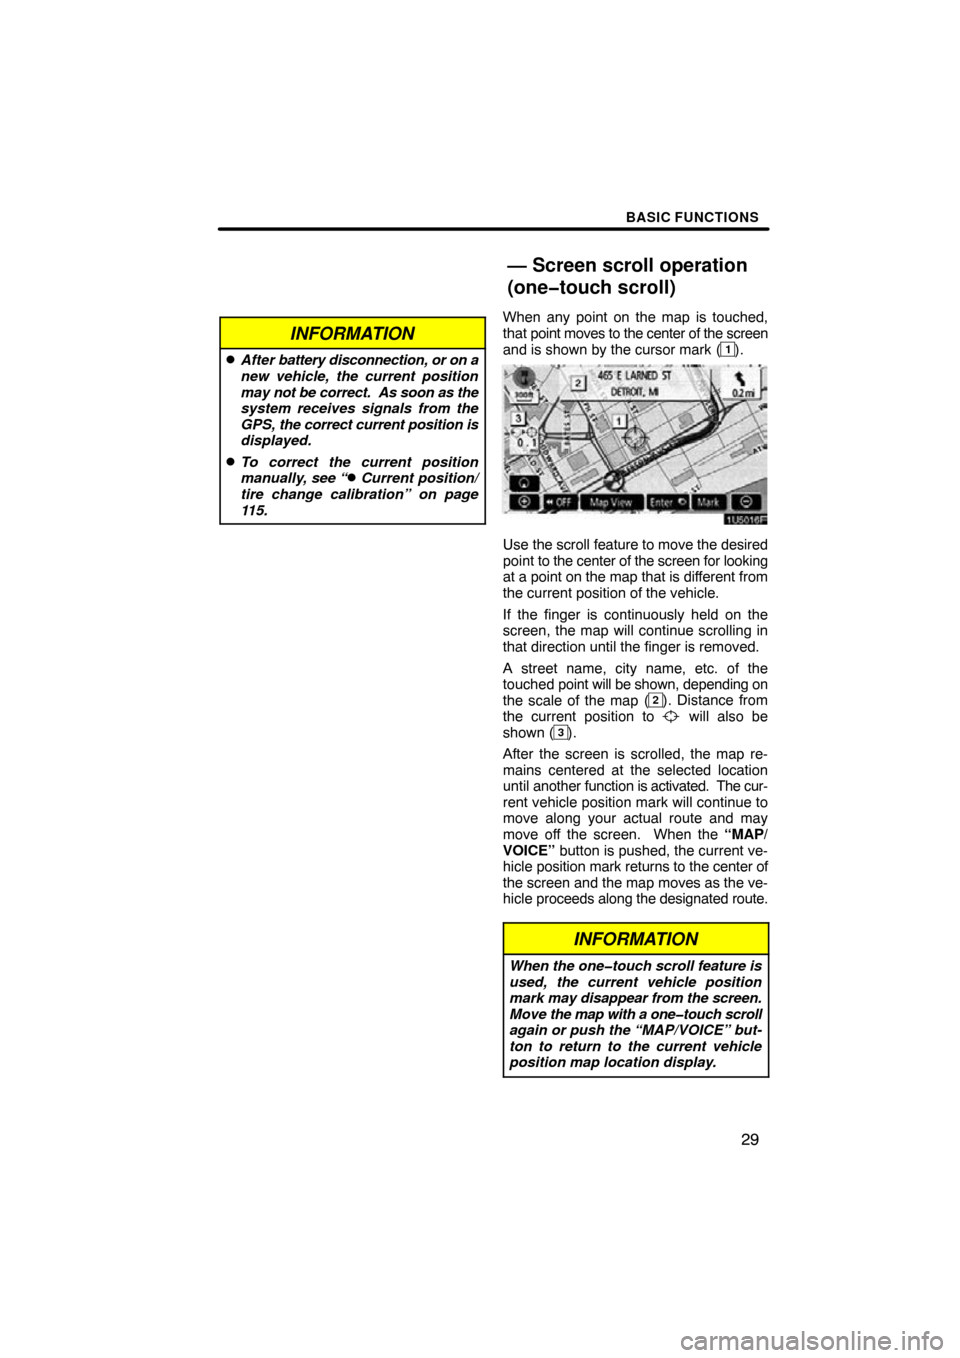 TOYOTA HIGHLANDER 2009 XU40 / 2.G Navigation Manual BASIC FUNCTIONS
29
INFORMATION
After battery disconnection, or on a
new vehicle, the current position
may not be correct.  As soon as the
system receives signals from the
GPS,  the correct current po